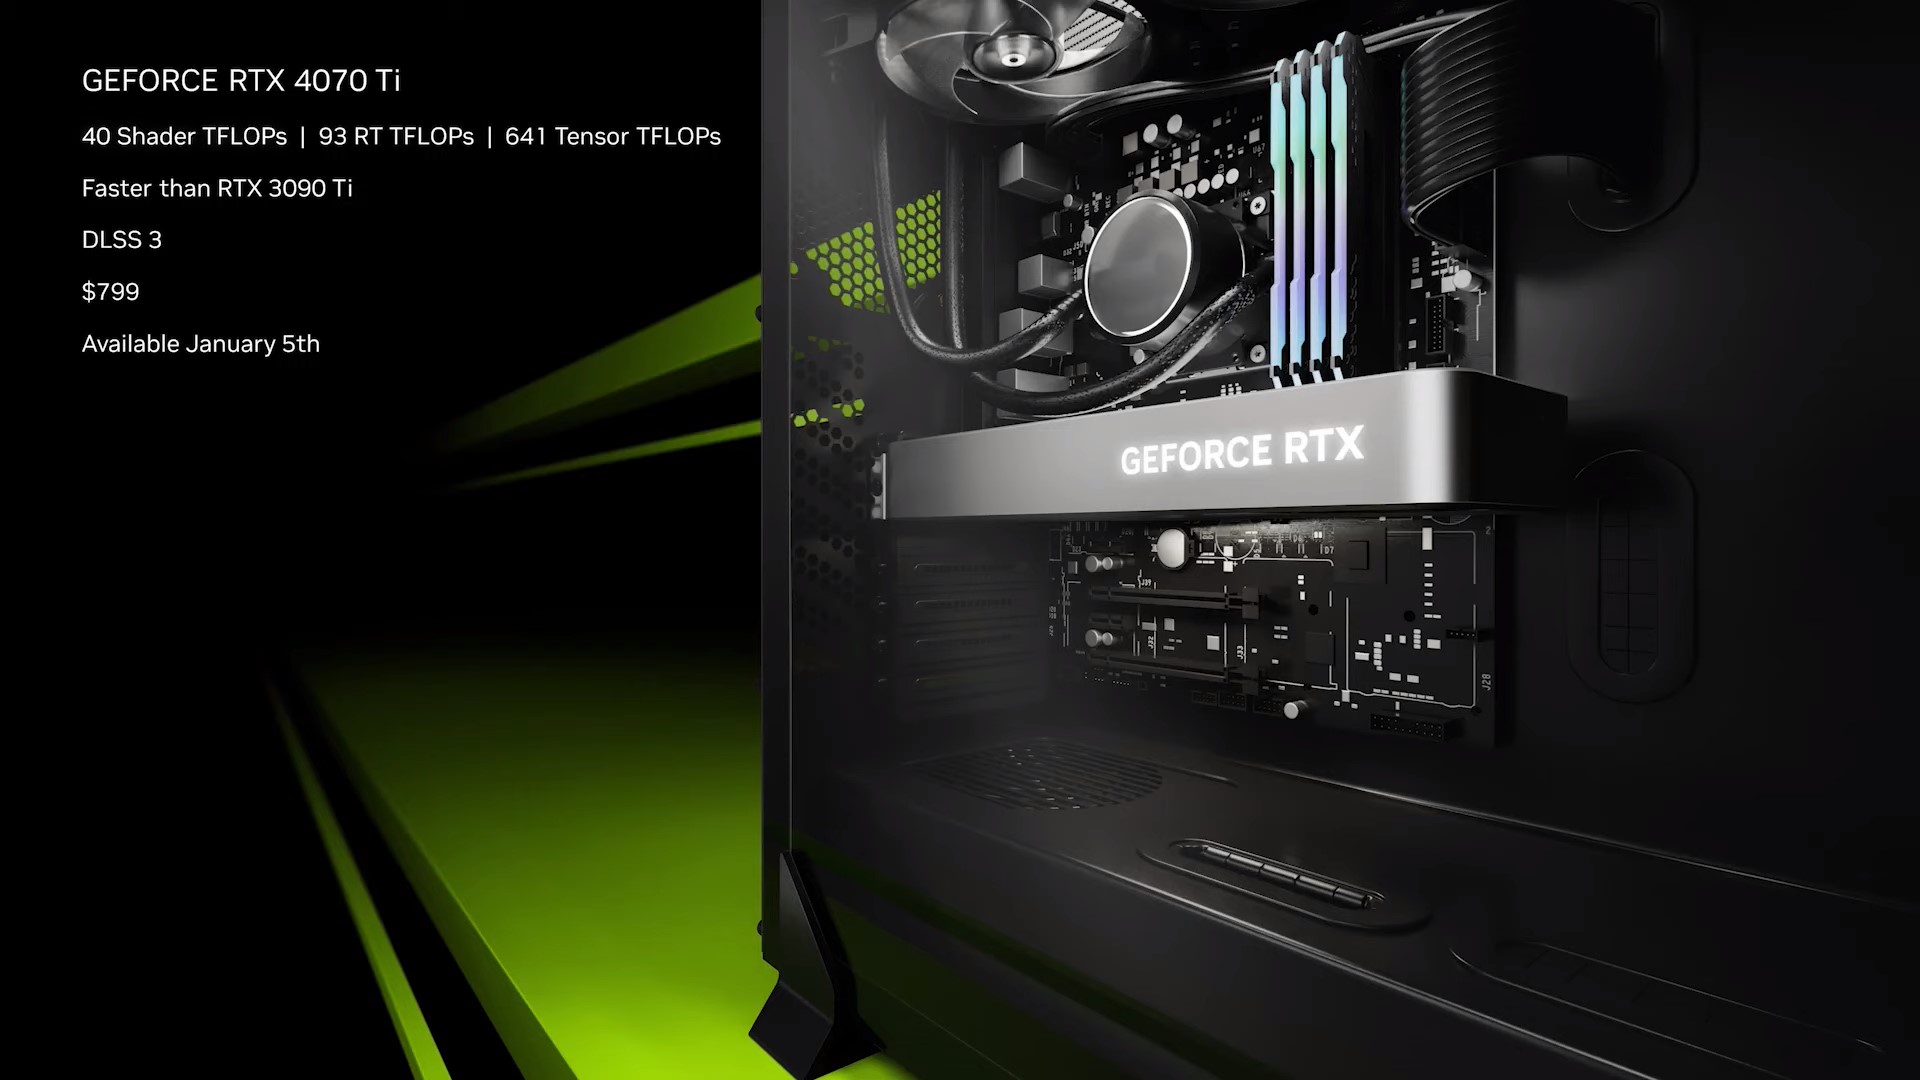 NVIDIA GeForce RTX 4070 Ti